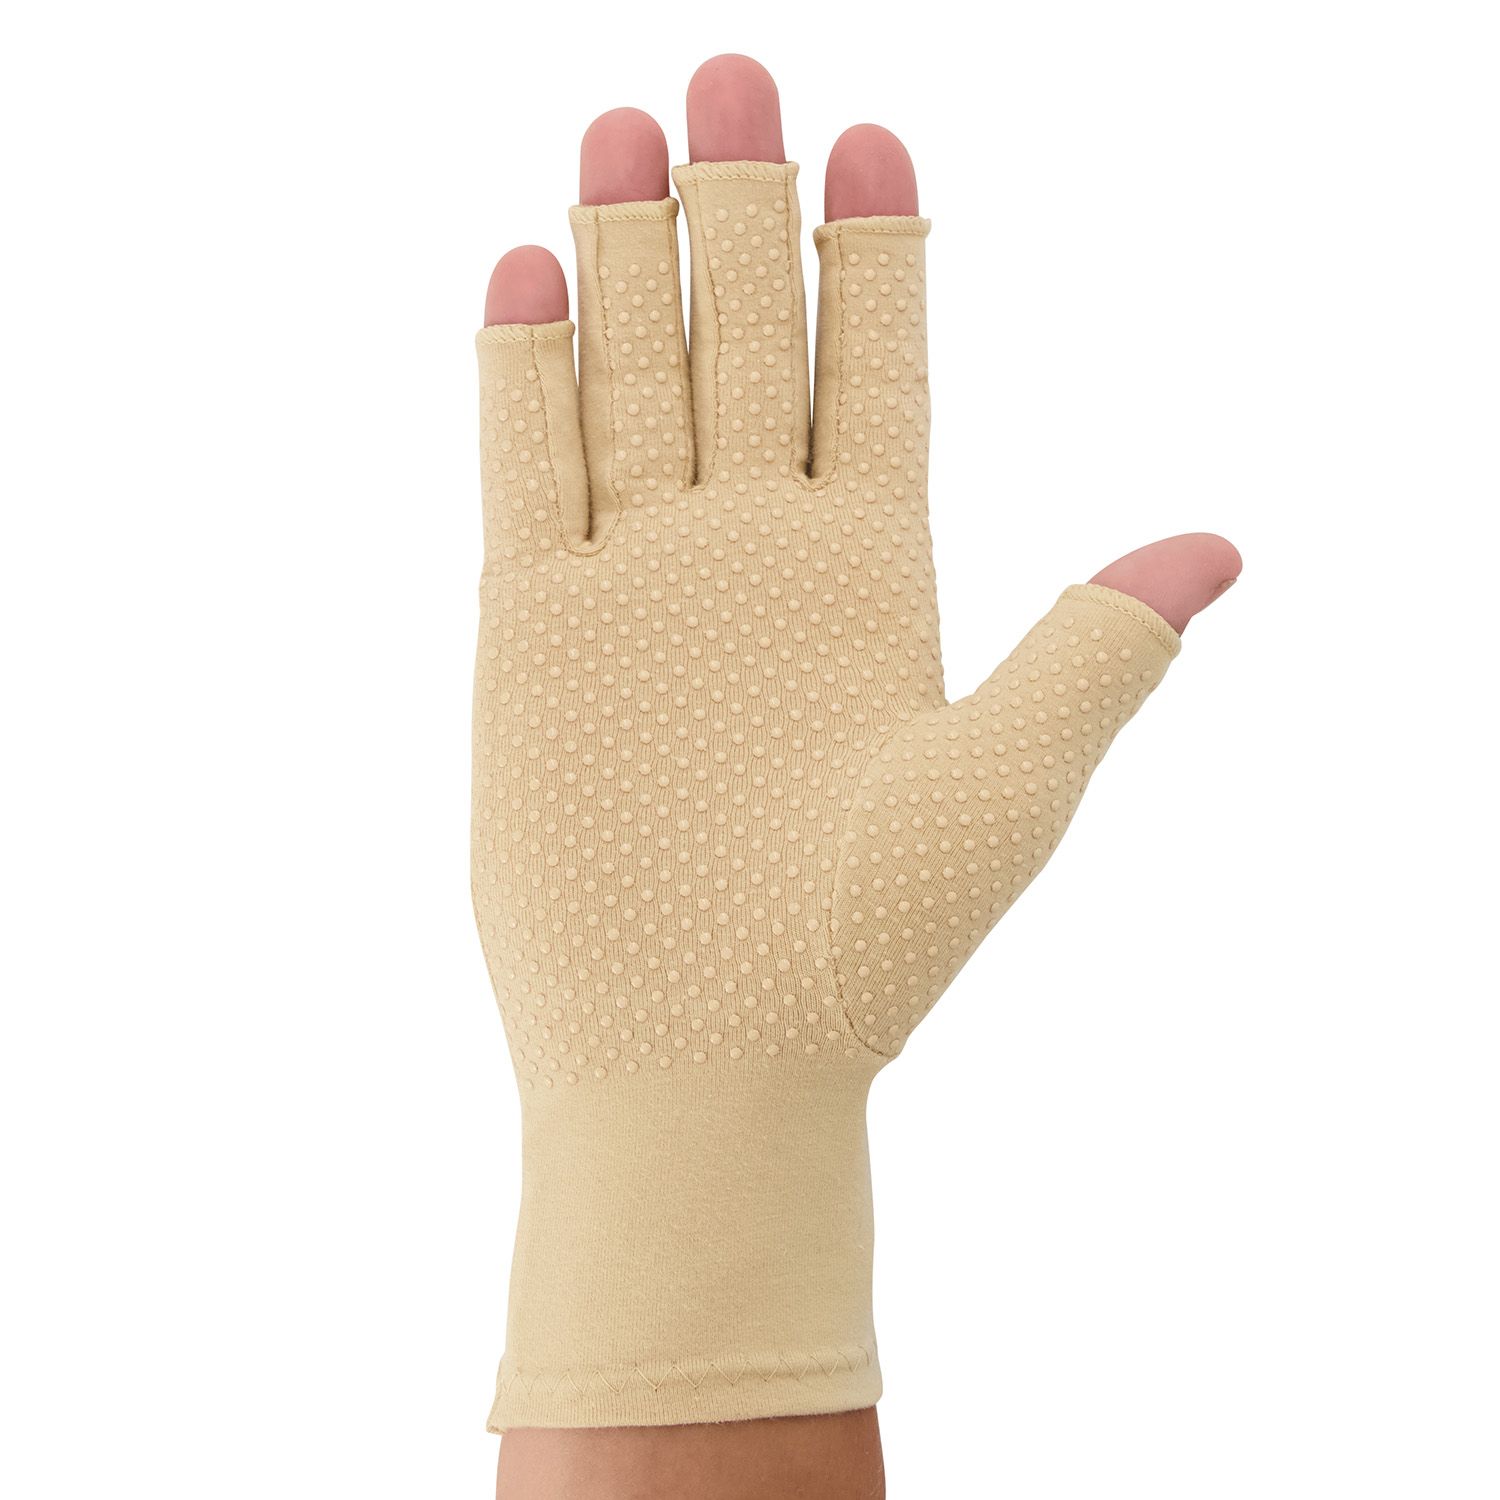 medidu rheumatoid arthritis osteoarthritis gloves with anti-slip layer product explanation